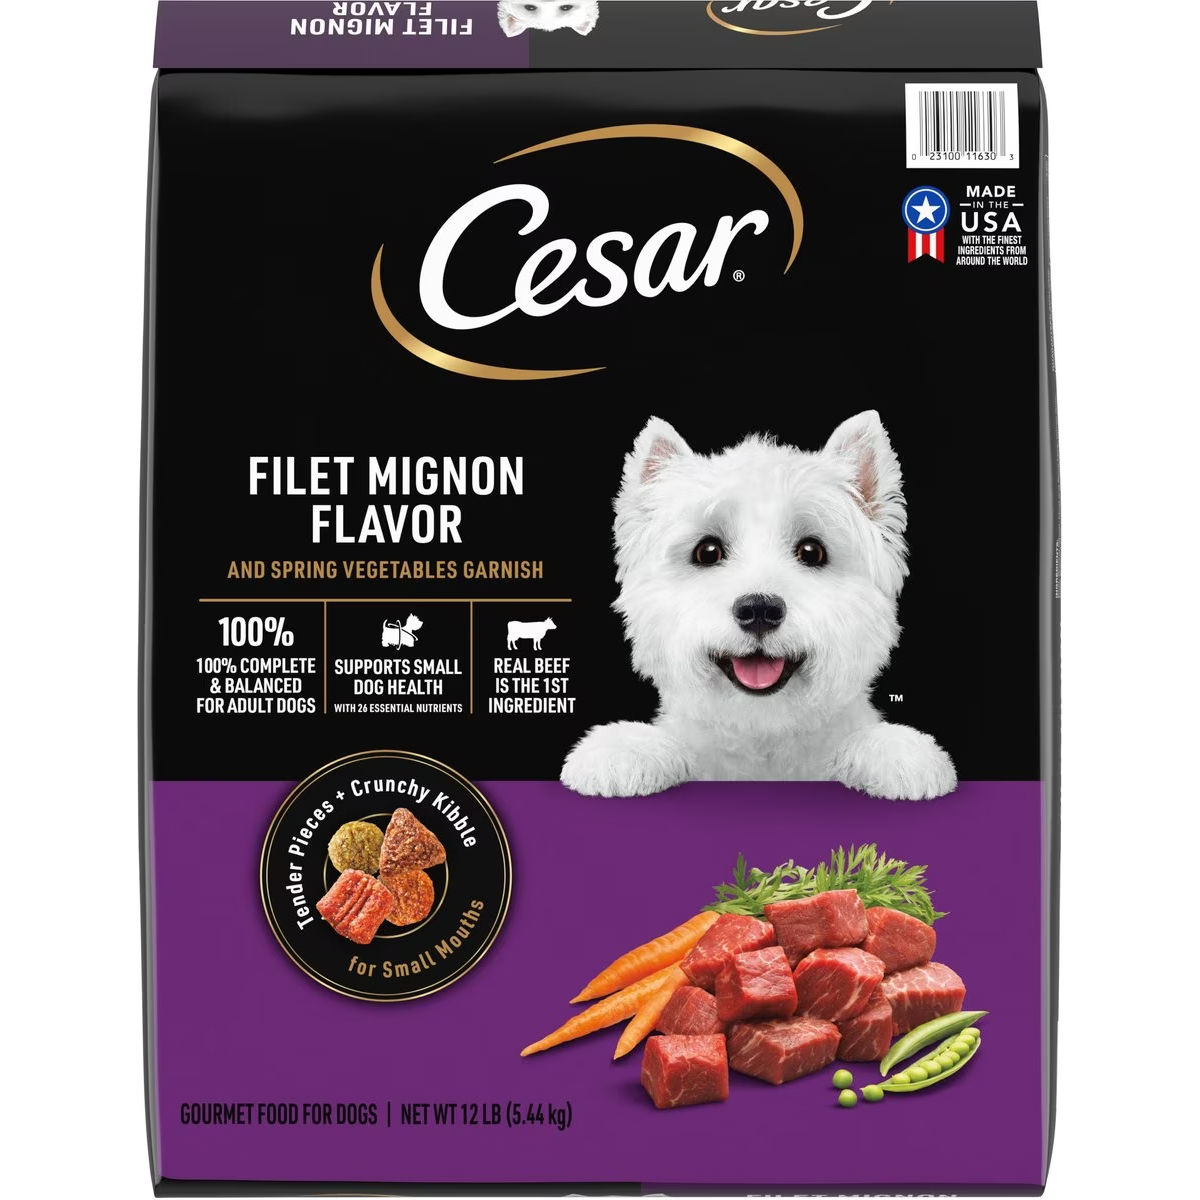 Cesar Filet Mignon Flavor & Spring Vegetables Garnish Small Breed Dry Dog Food